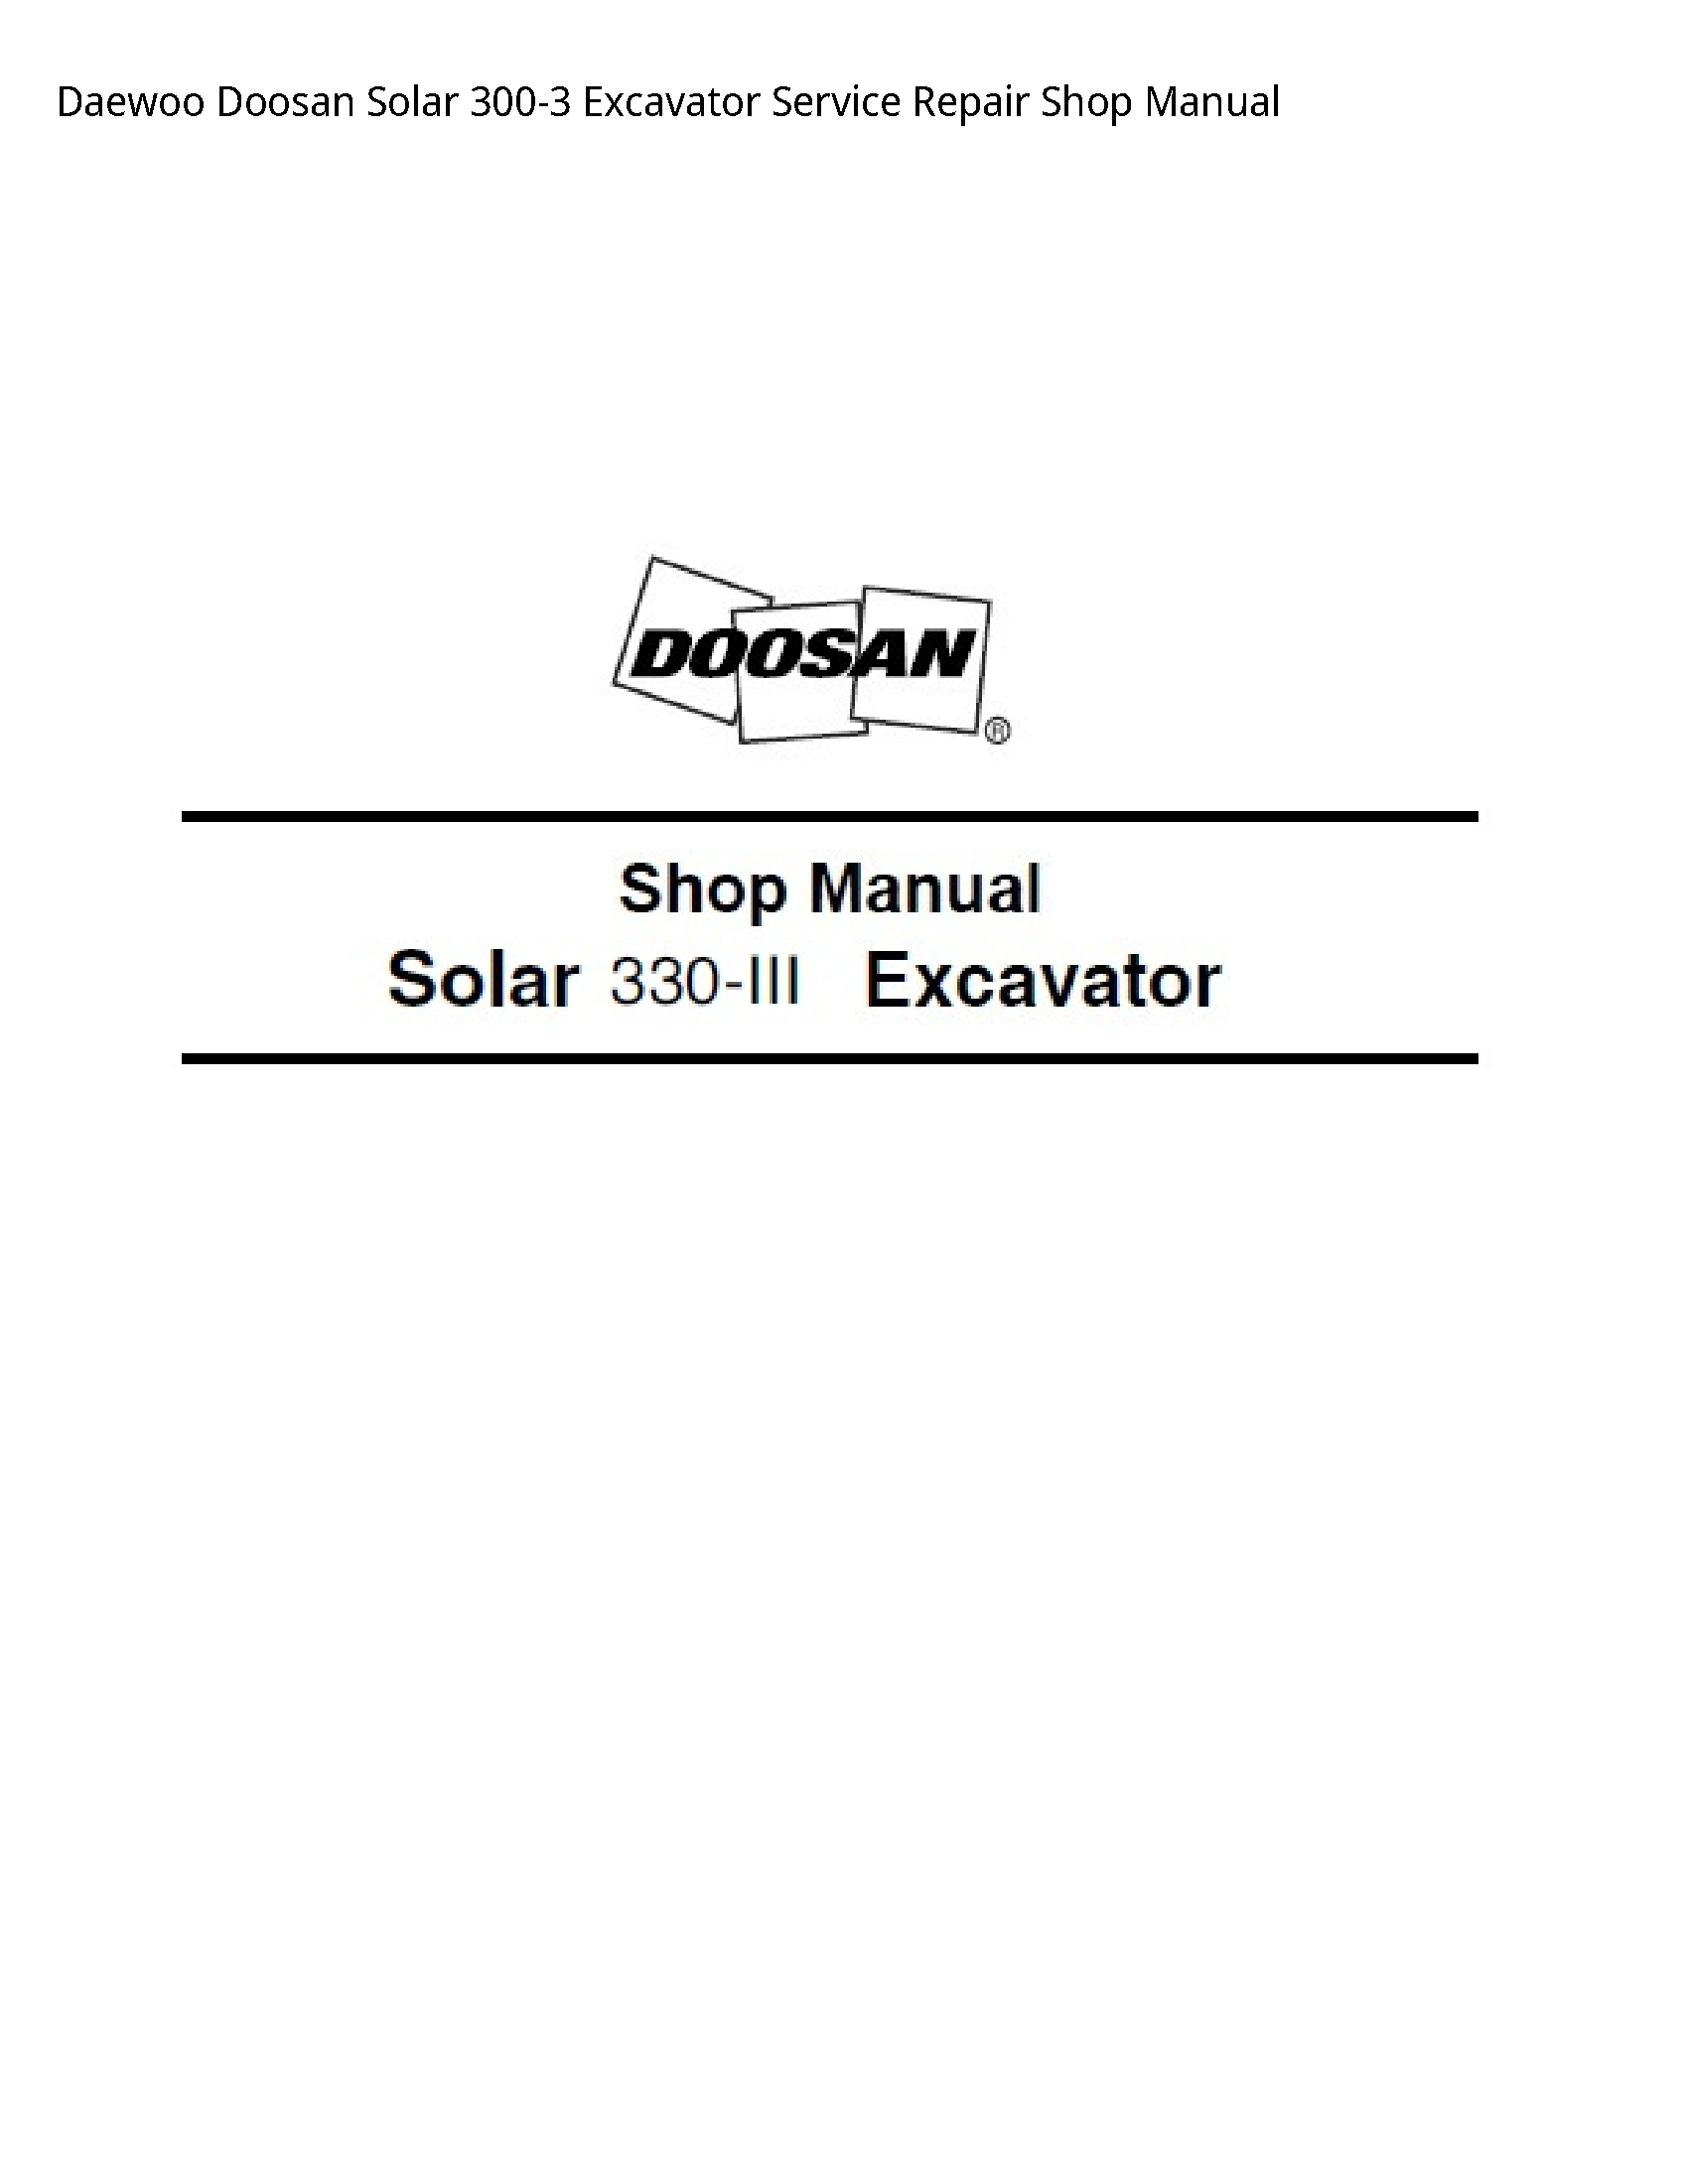 Daewoo Doosan 300-3 Solar Excavator manual